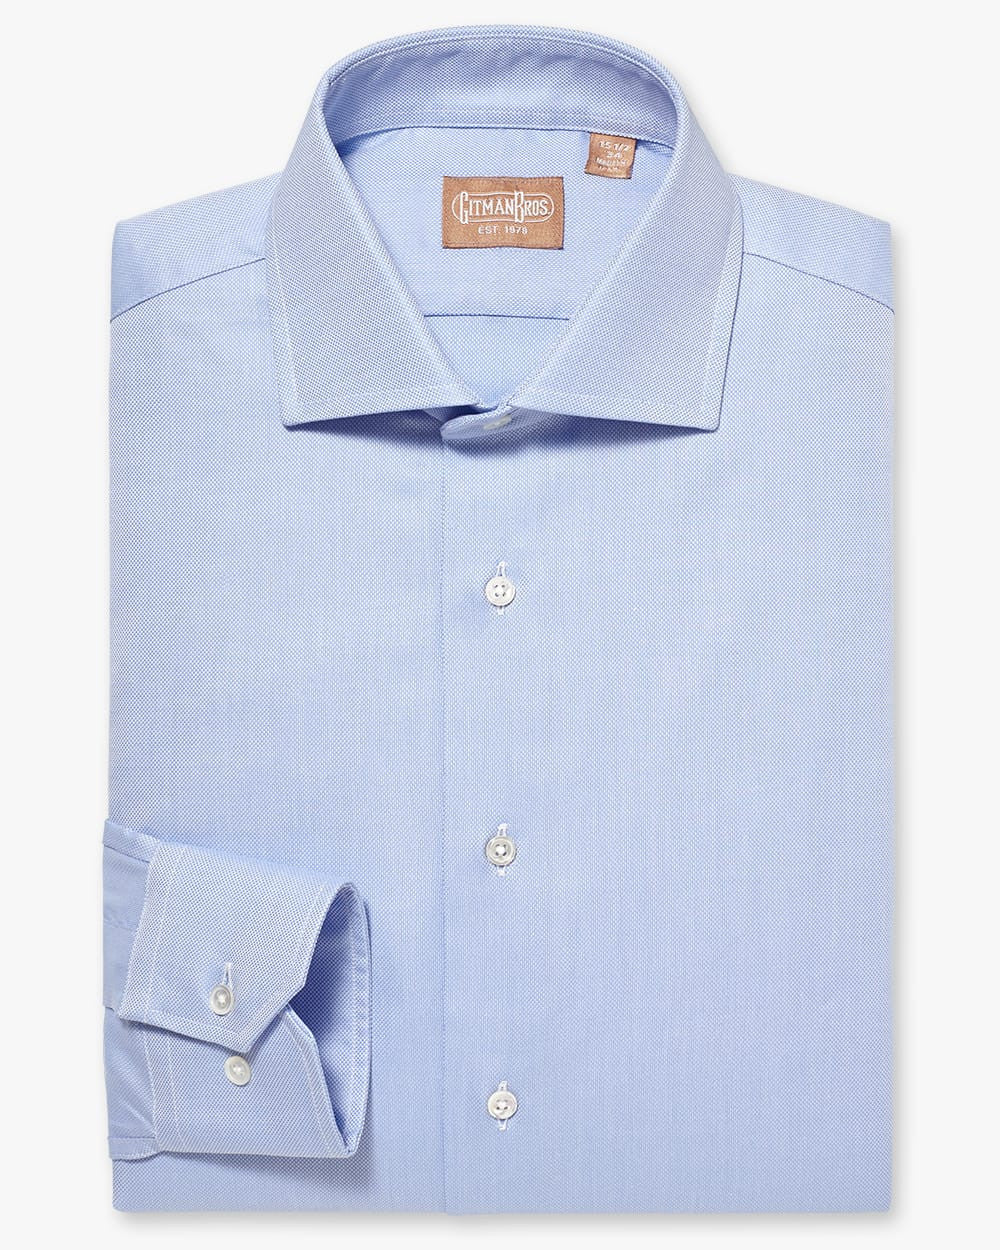 Gitman Bros. Widespread Royal Oxford Blue Dress Shirt